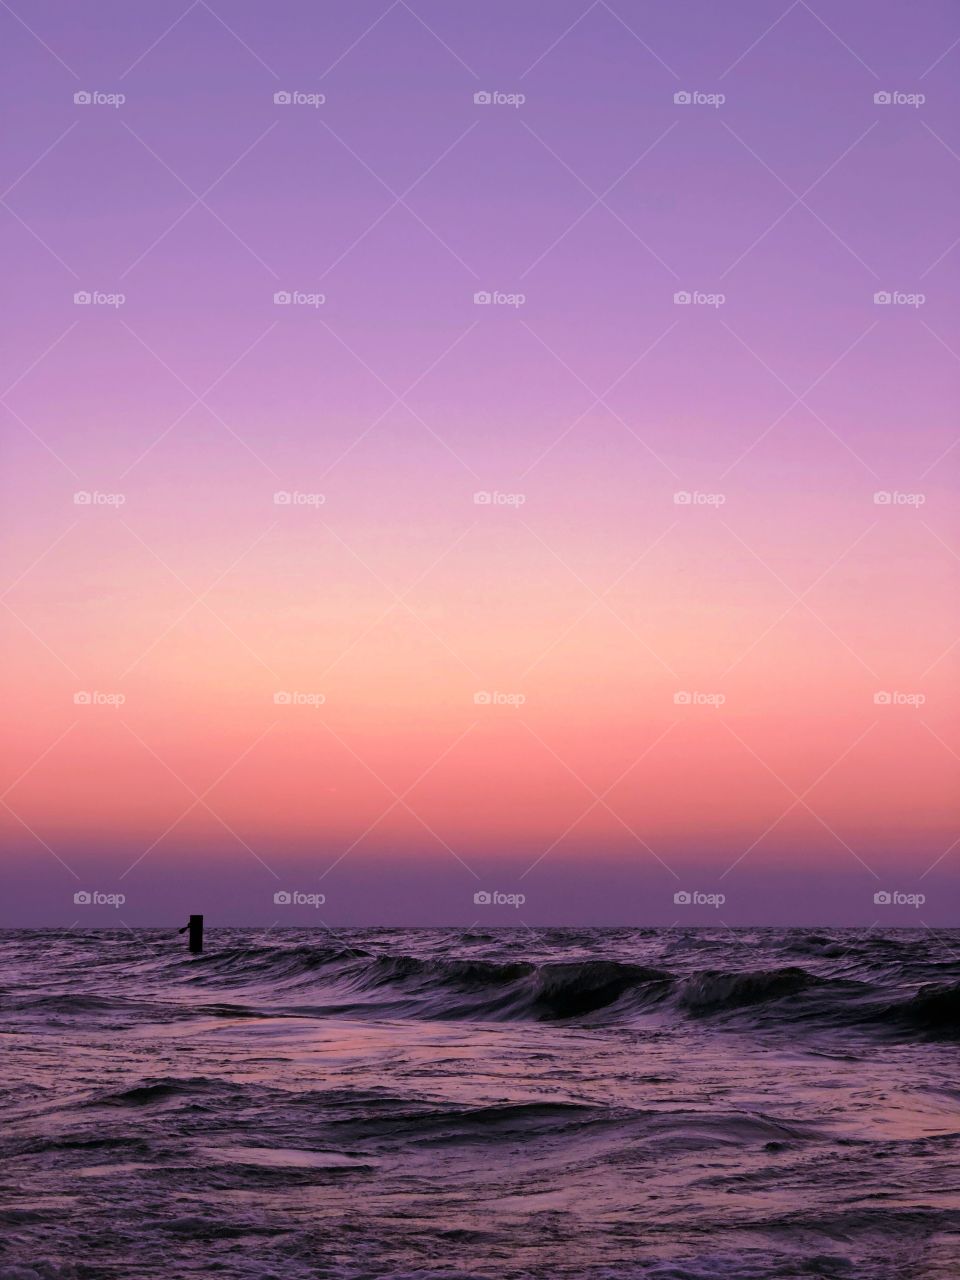 Beautifull purple night time sky and sea